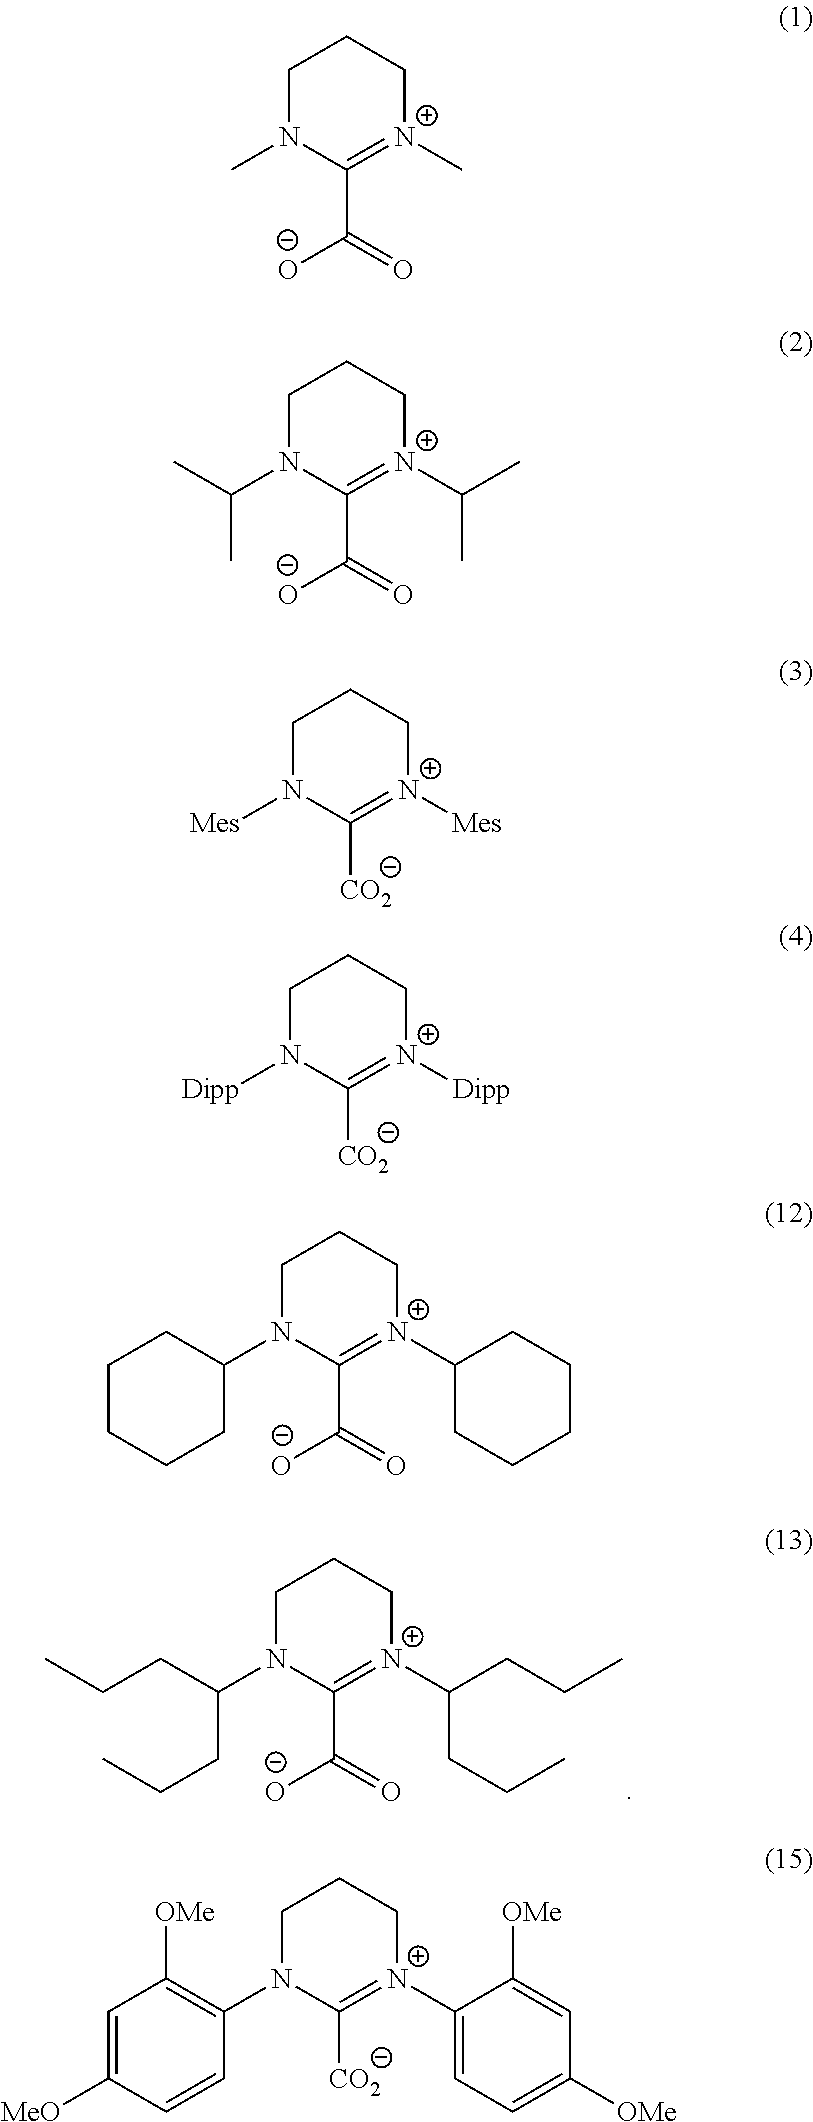 Ring-opening laurolactam polymerization with latent initiators